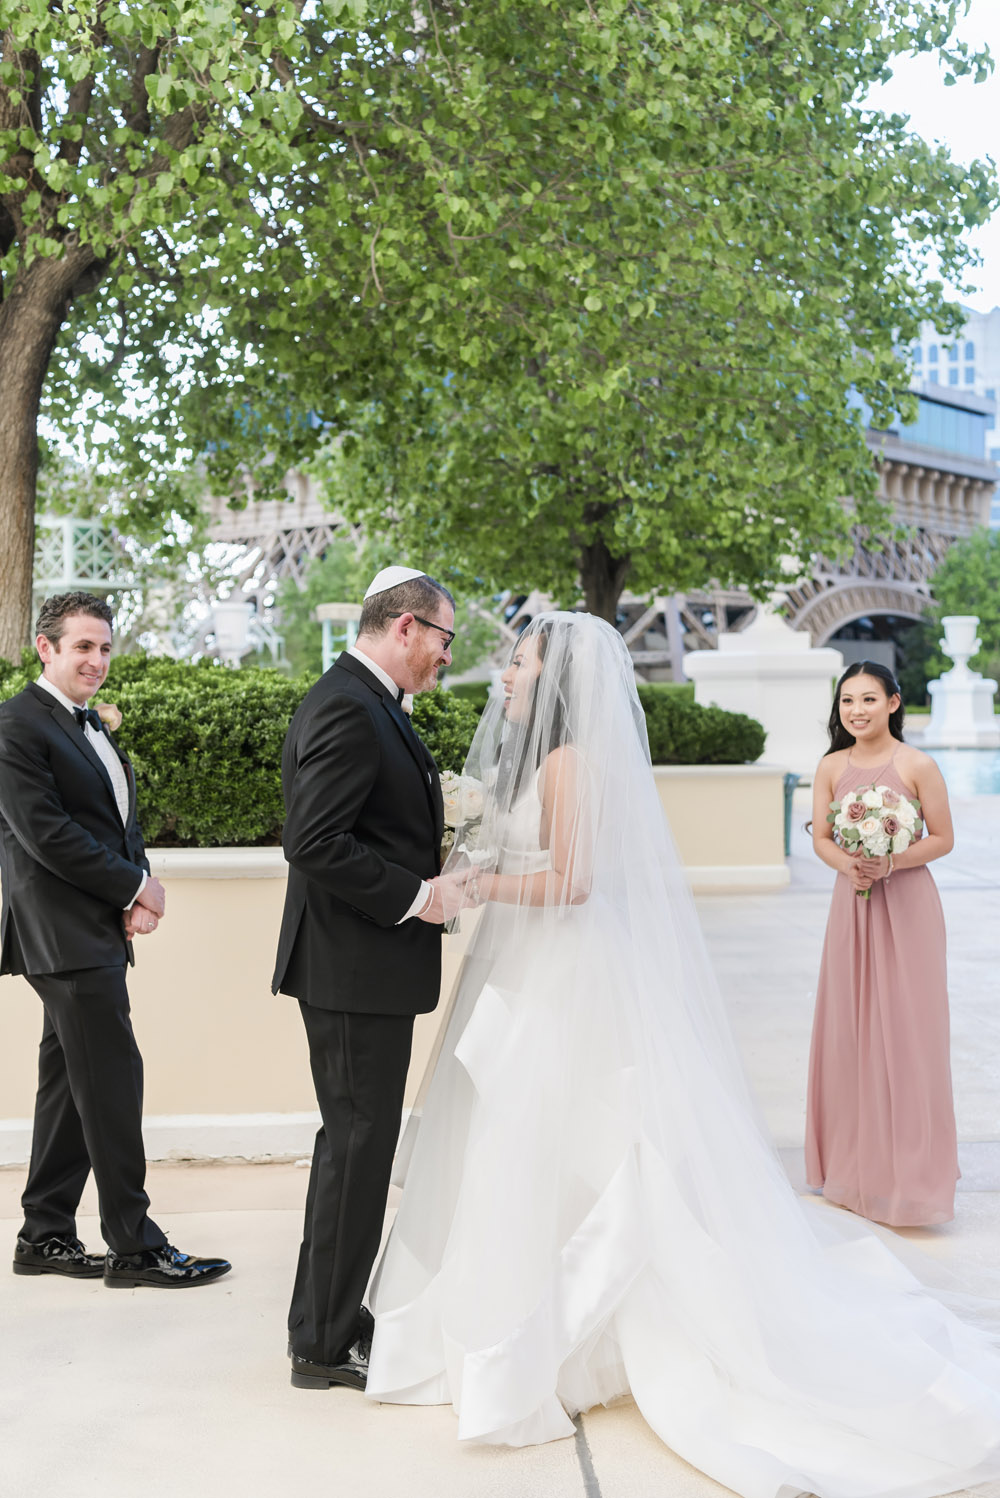 Sam + Vilay | Paris Las Vegas Wedding | Kristen Marie Weddings + Portraits, Las Vegas Wedding Photographer